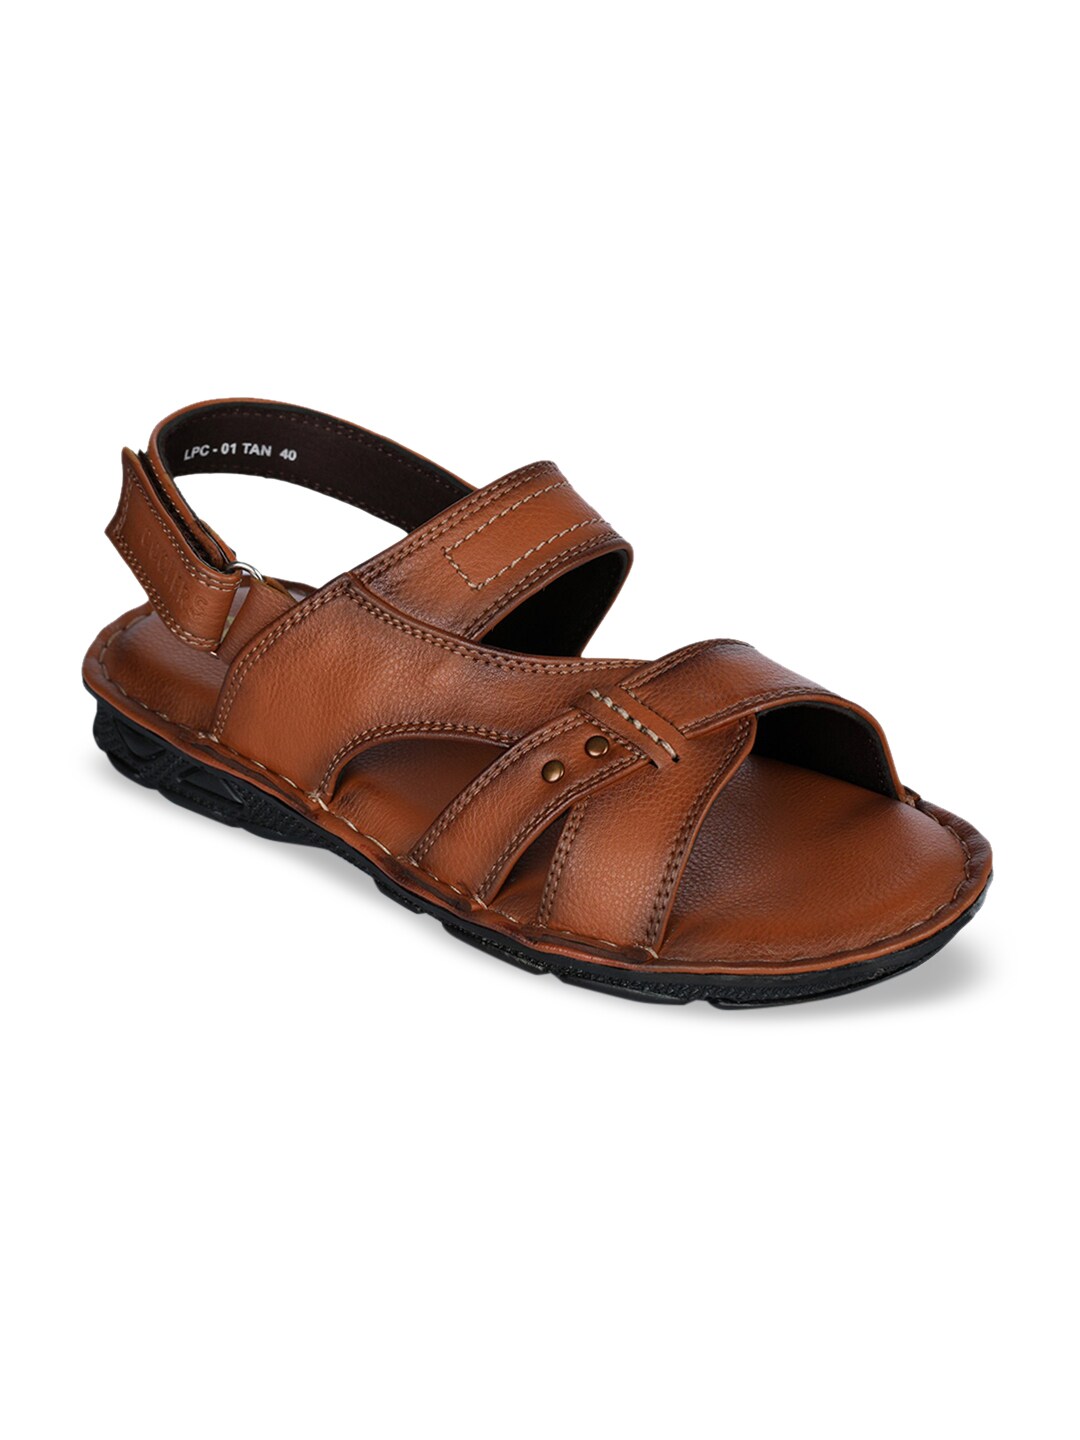 Liberty Men Tan Brown Leather Comfort Sandals